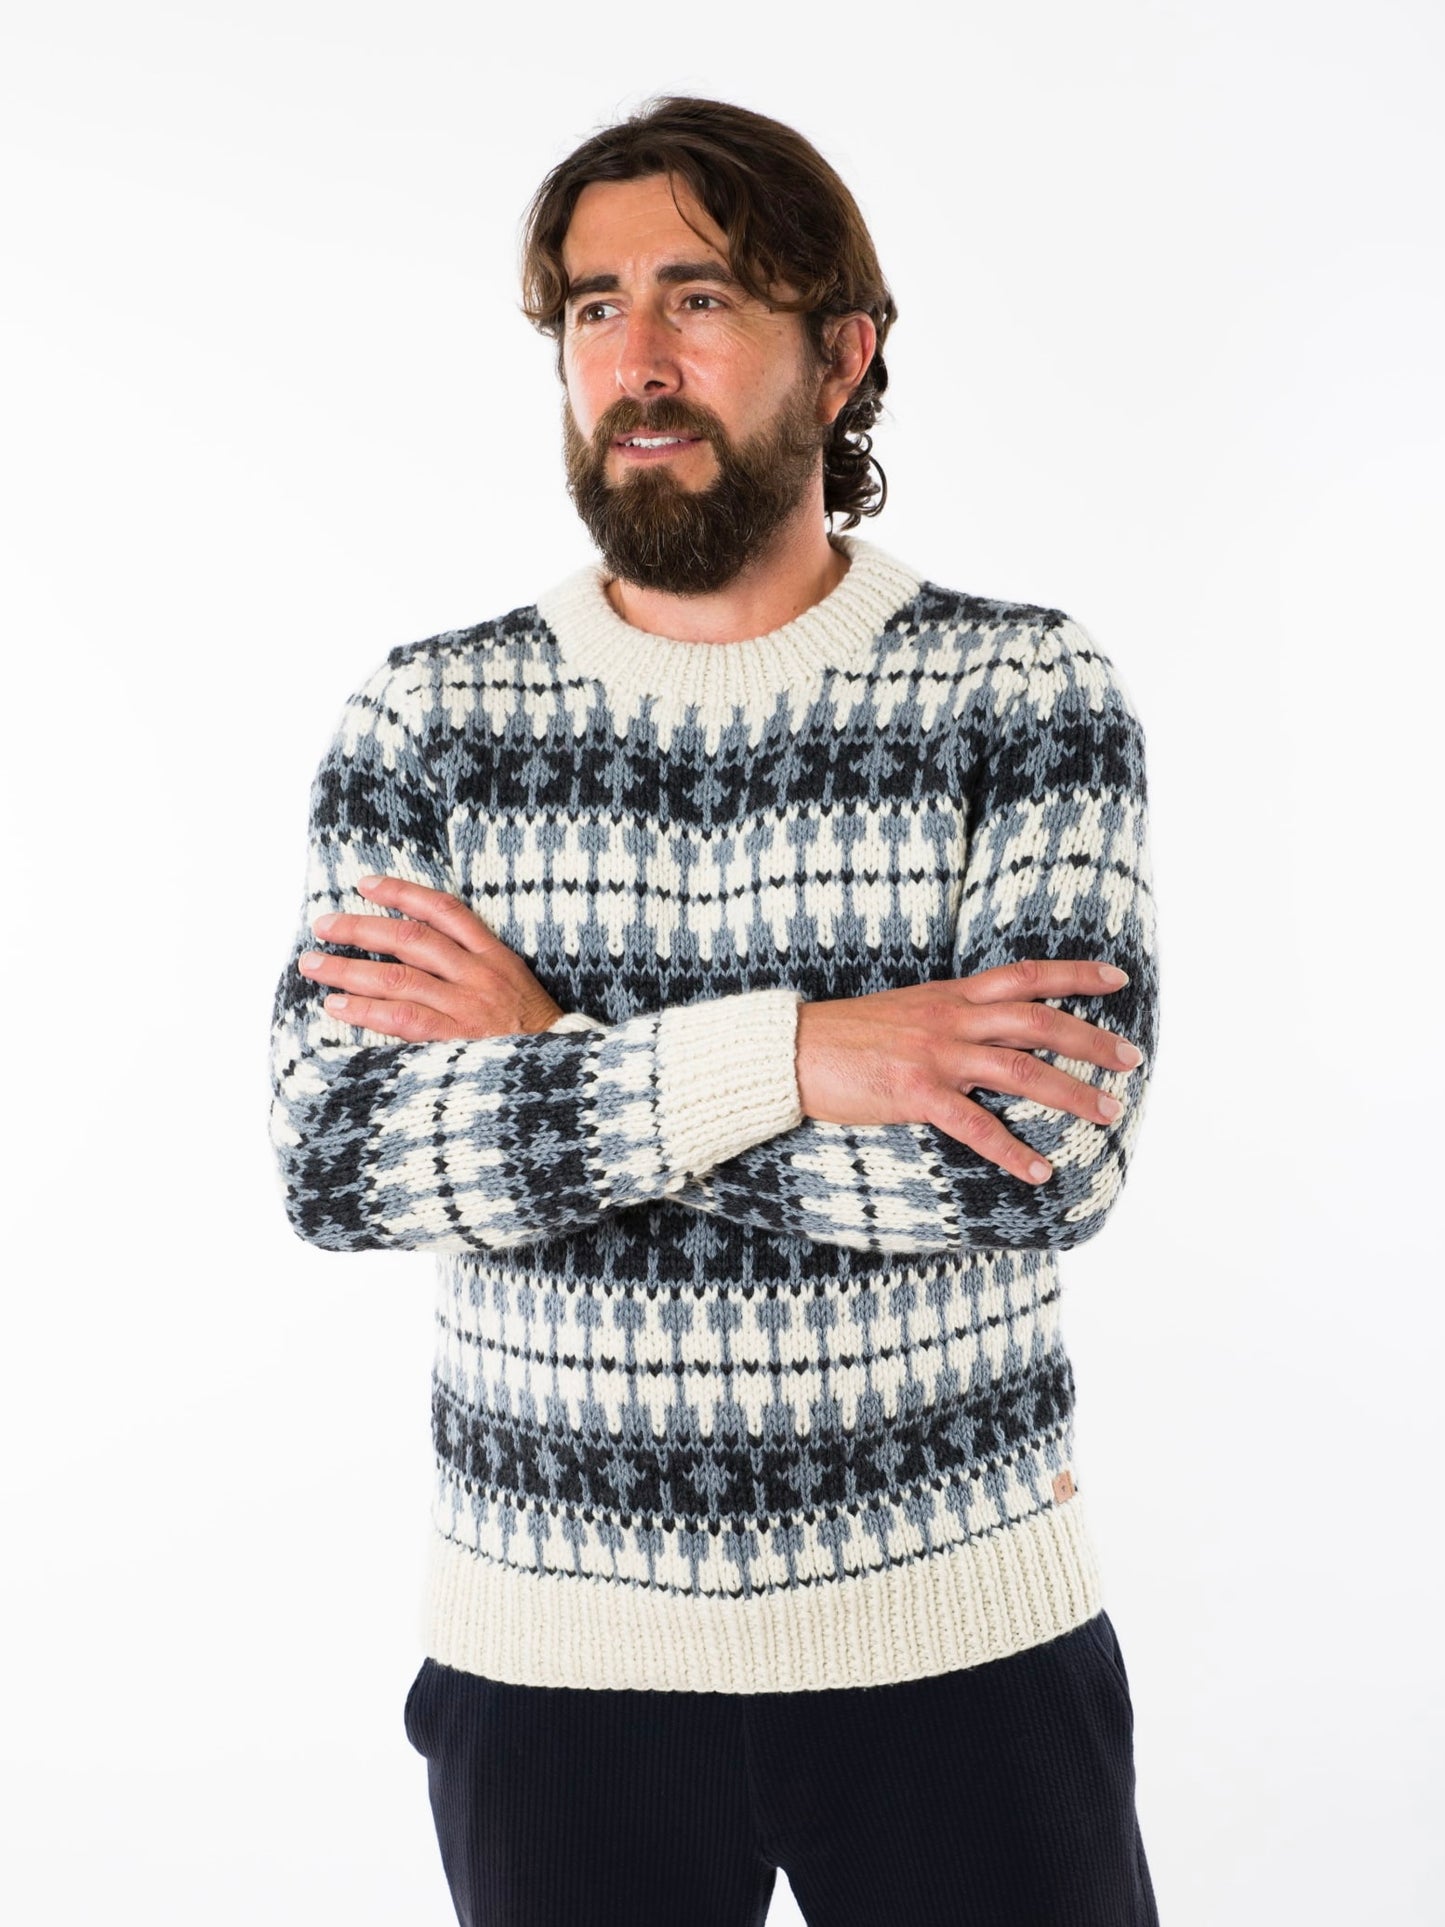 Norweger Pullover Skaane, in 2 Farben